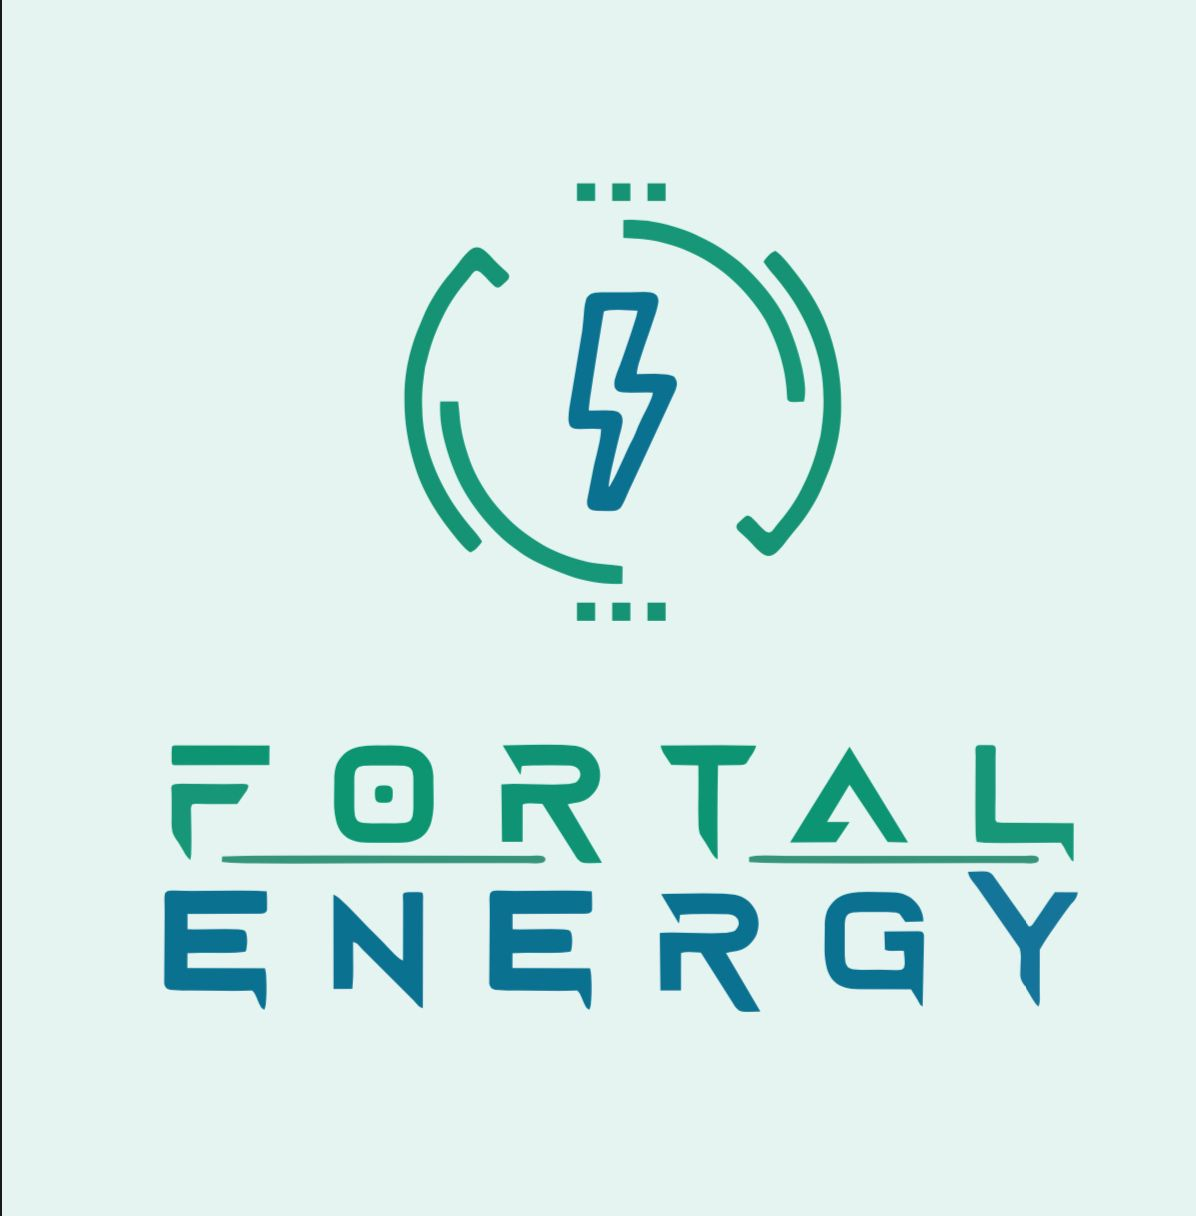 FORTAL ENERGY